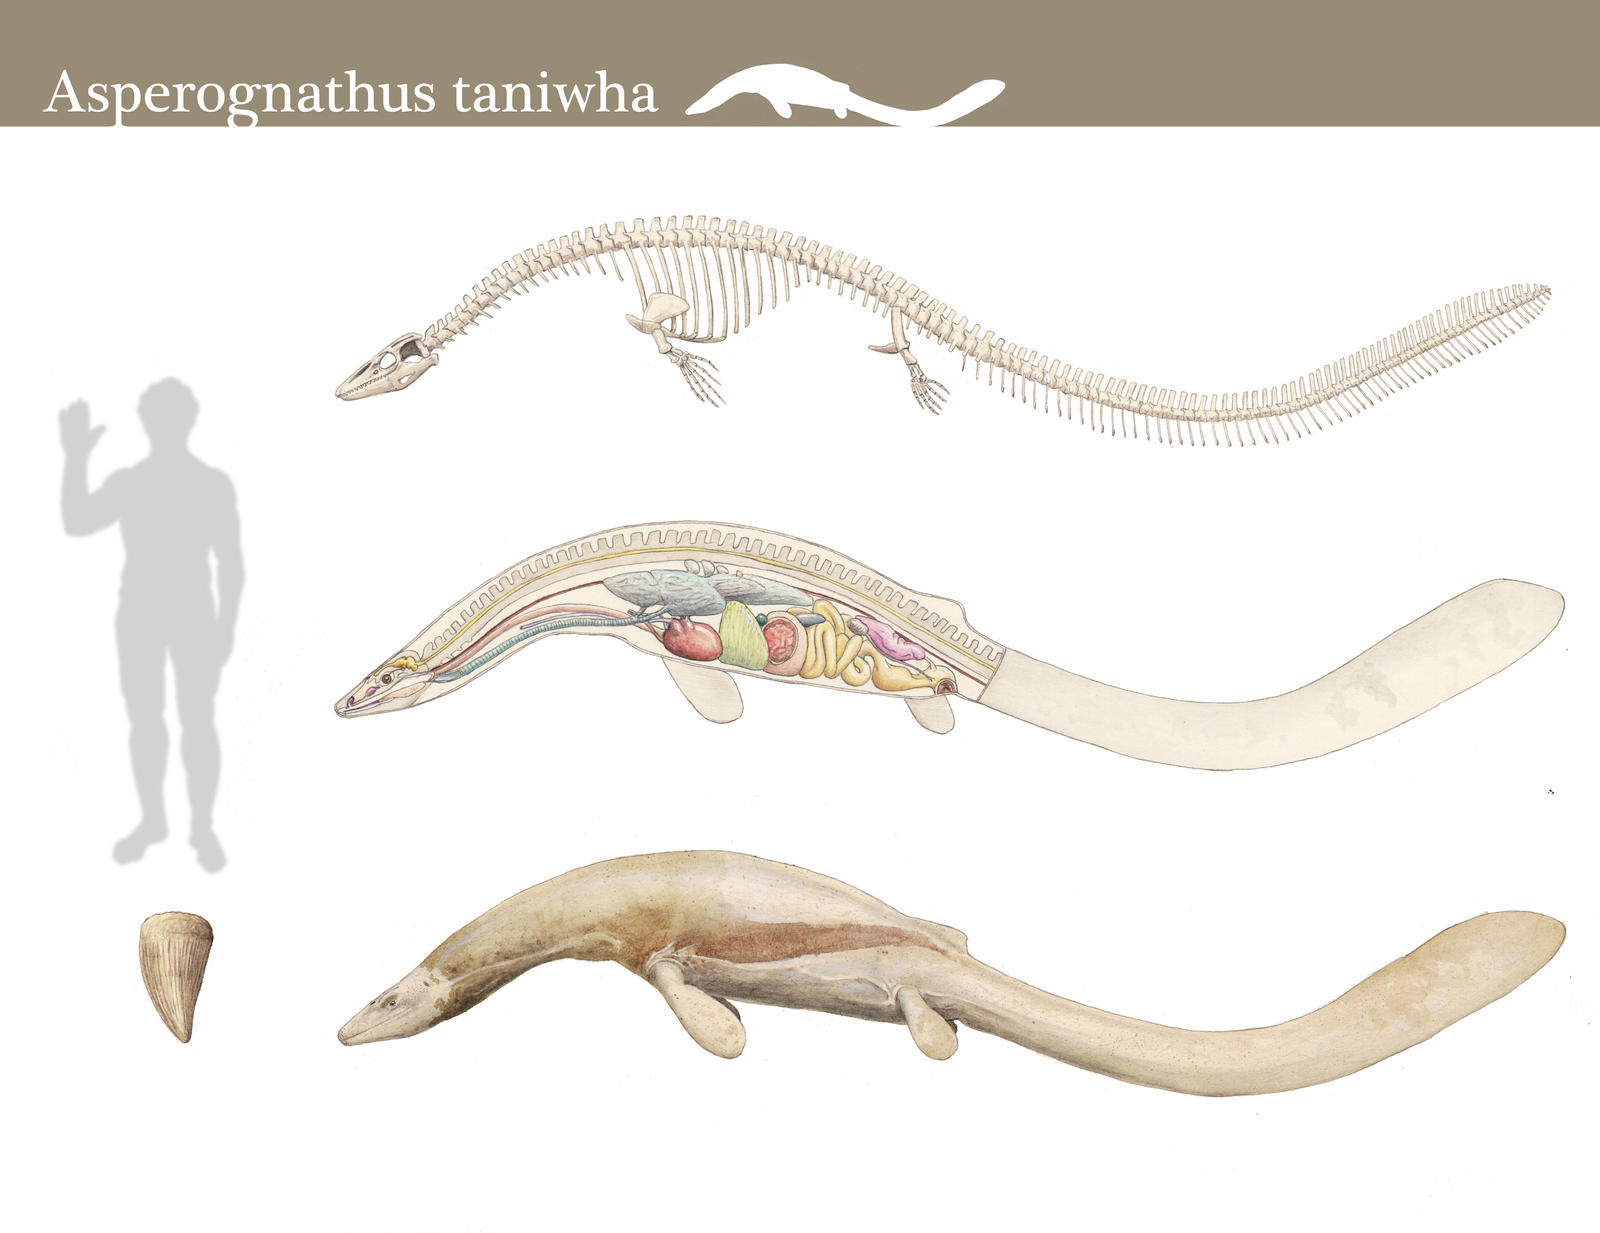 Asperognathus taniwha